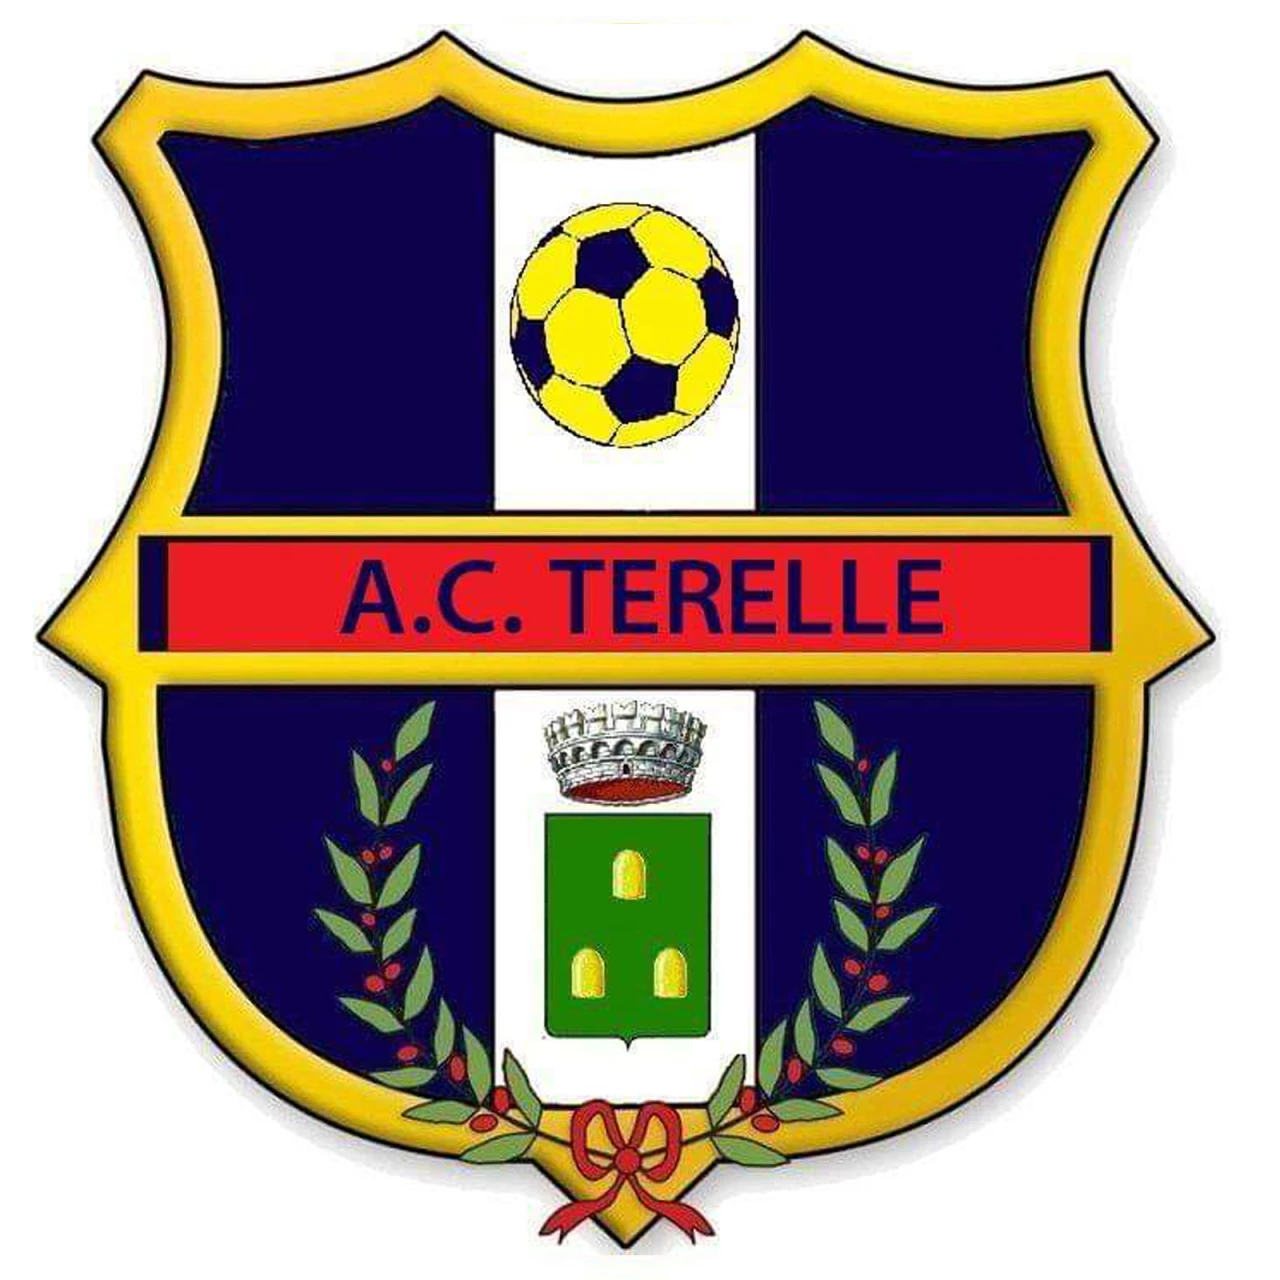 A.C. Terelle